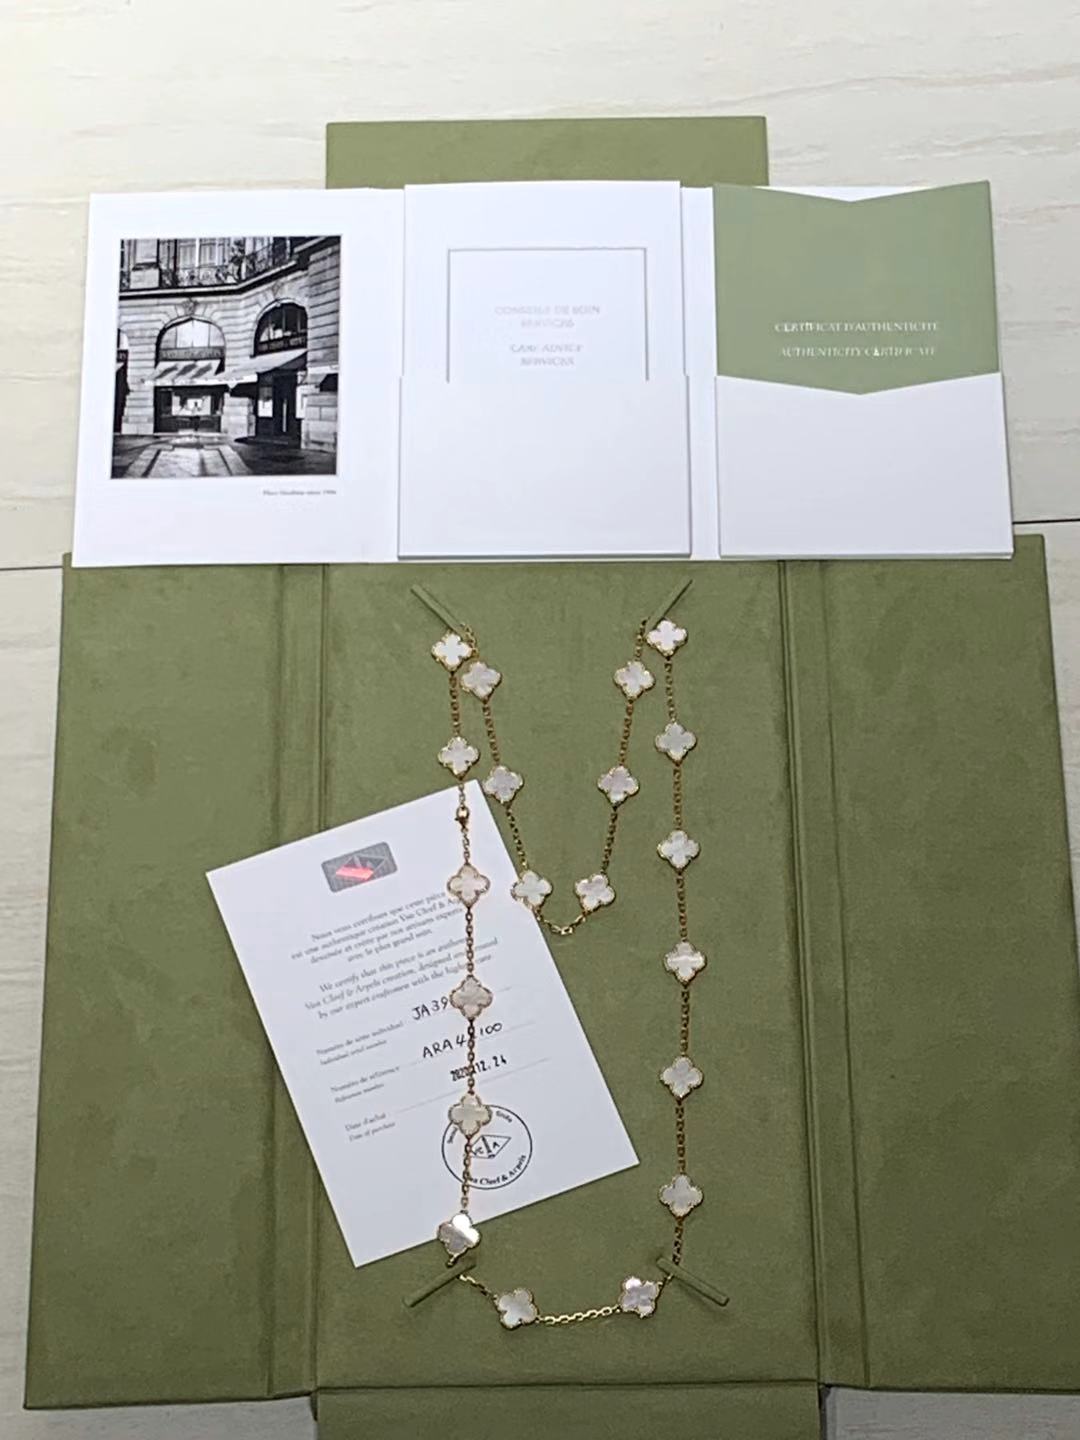 VAN CLEEF & ARPELS Vintage Alhambra 20 Motifs Mother Of Pearl Long Necklace